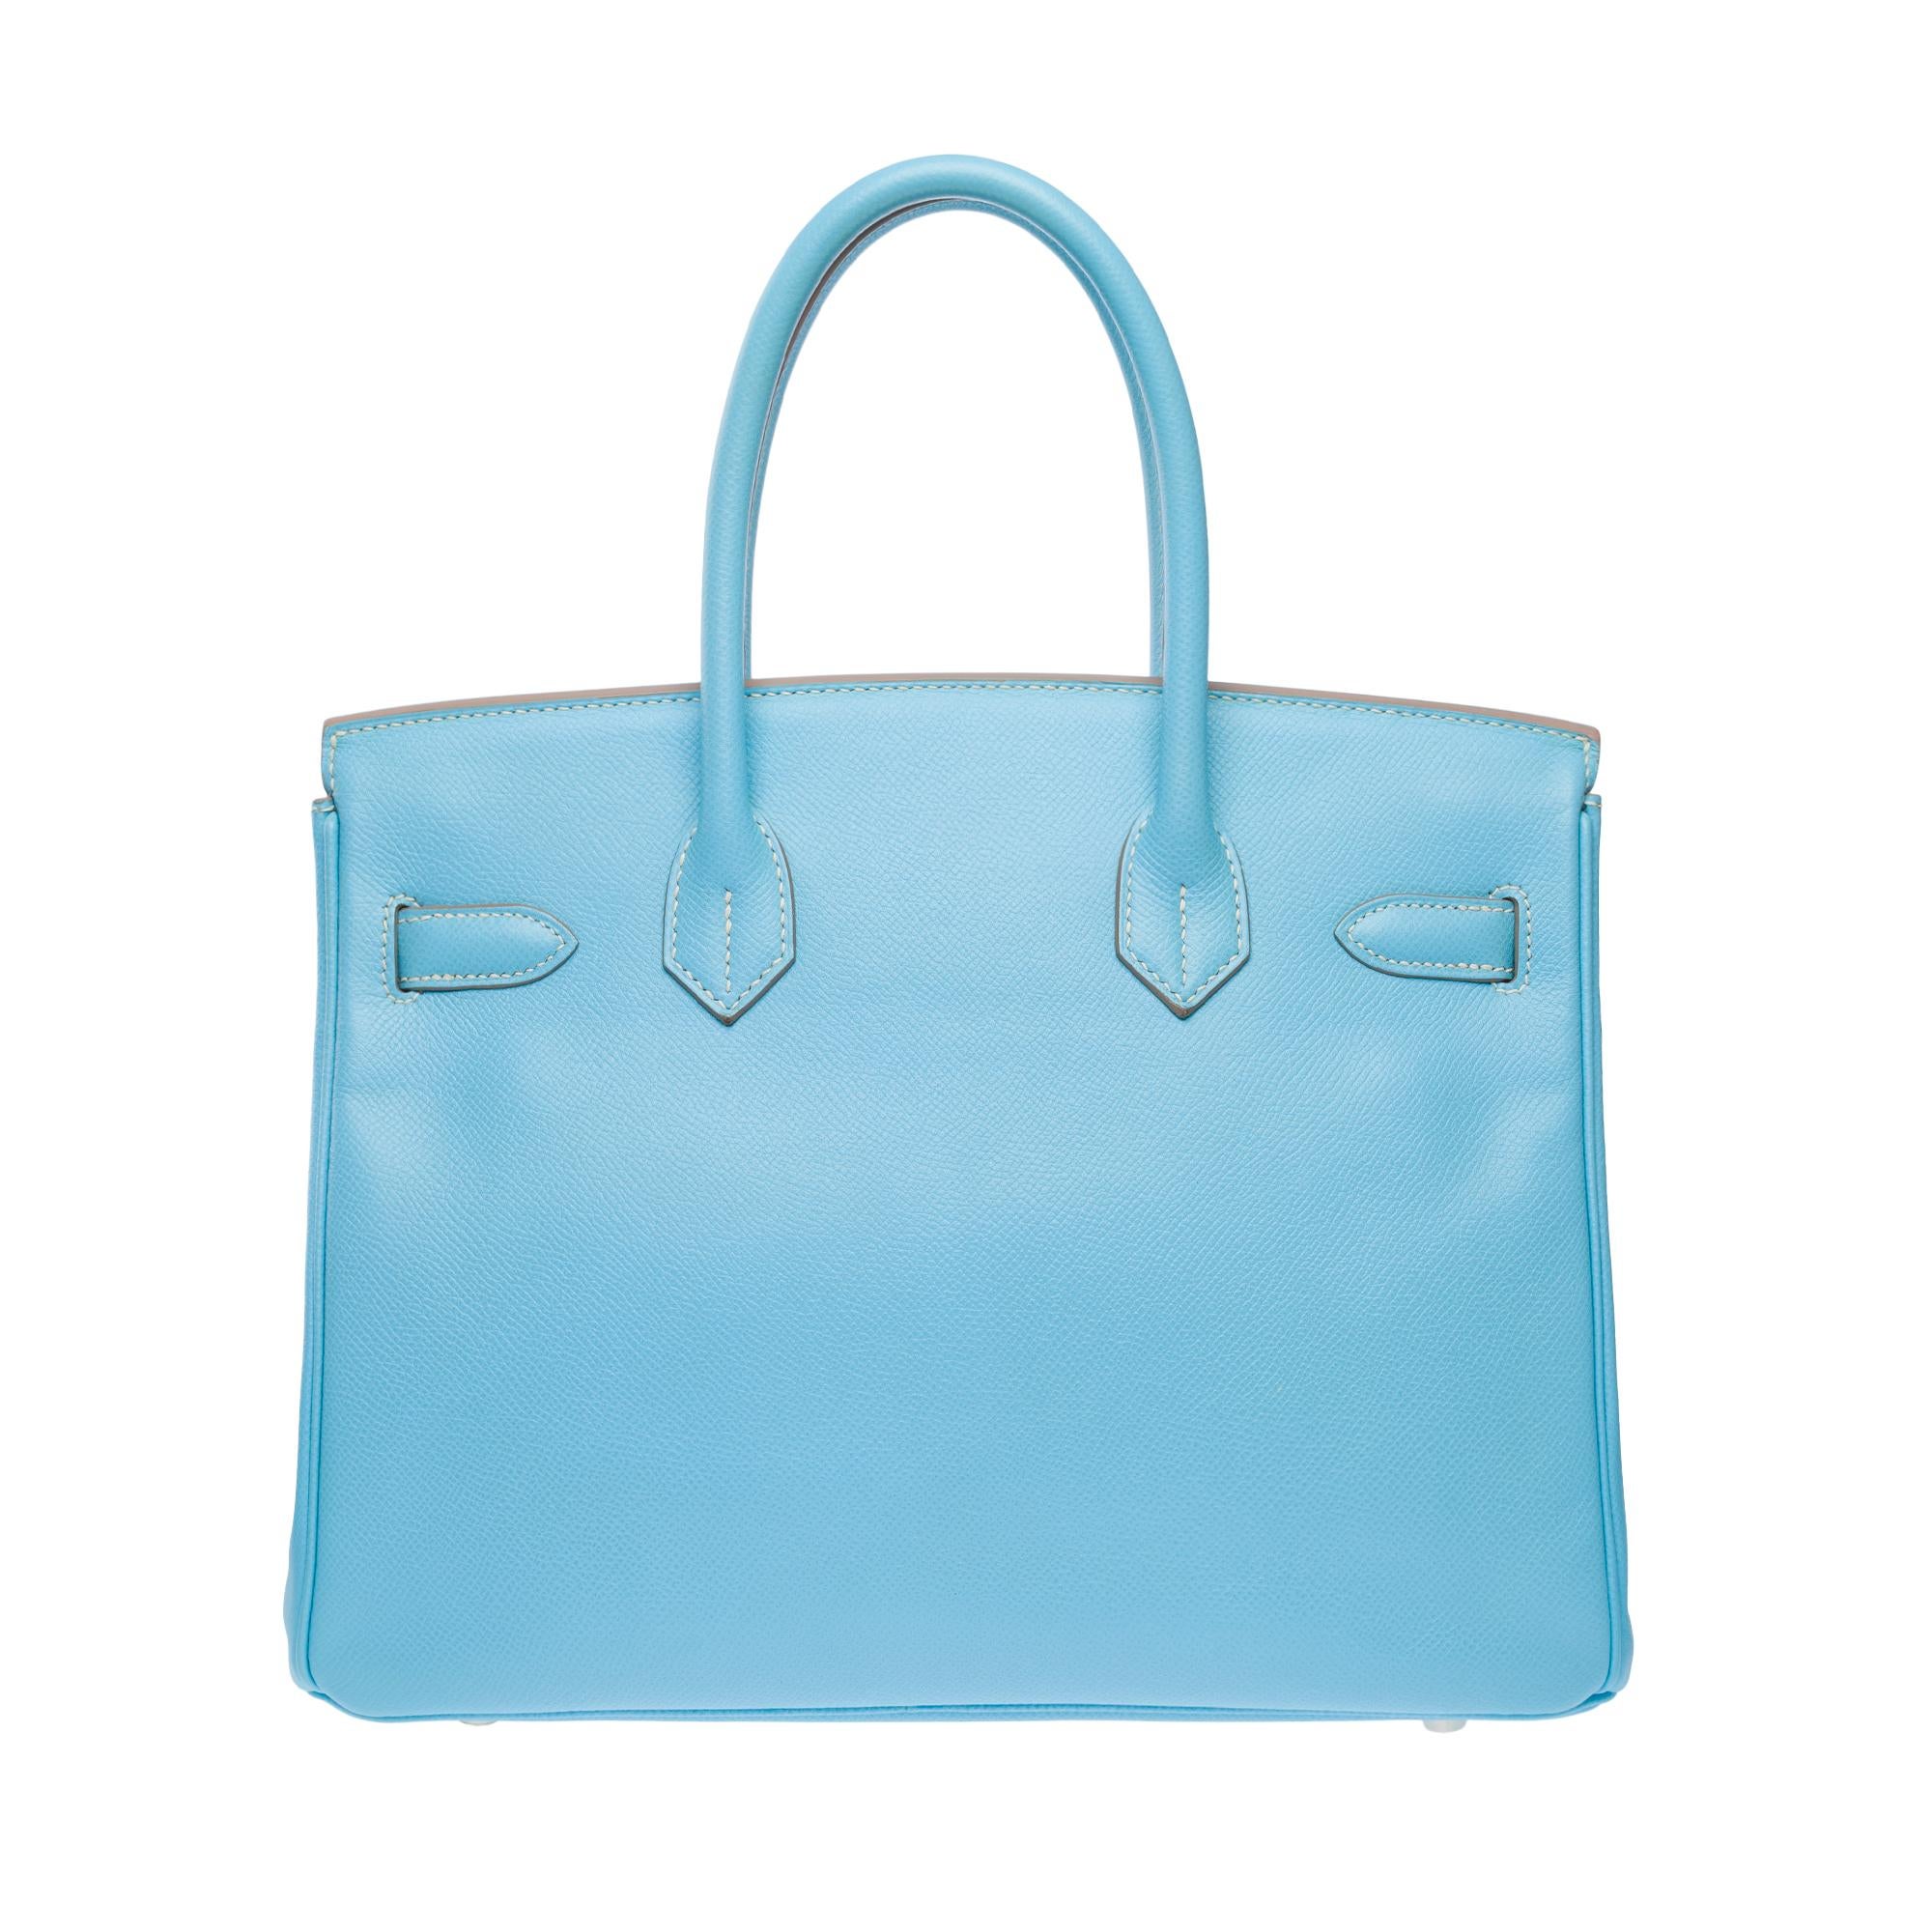 Rare Hermes Birkin 30 Candy Edition handbag in Celeste Blue Epsom leather, SHW 1